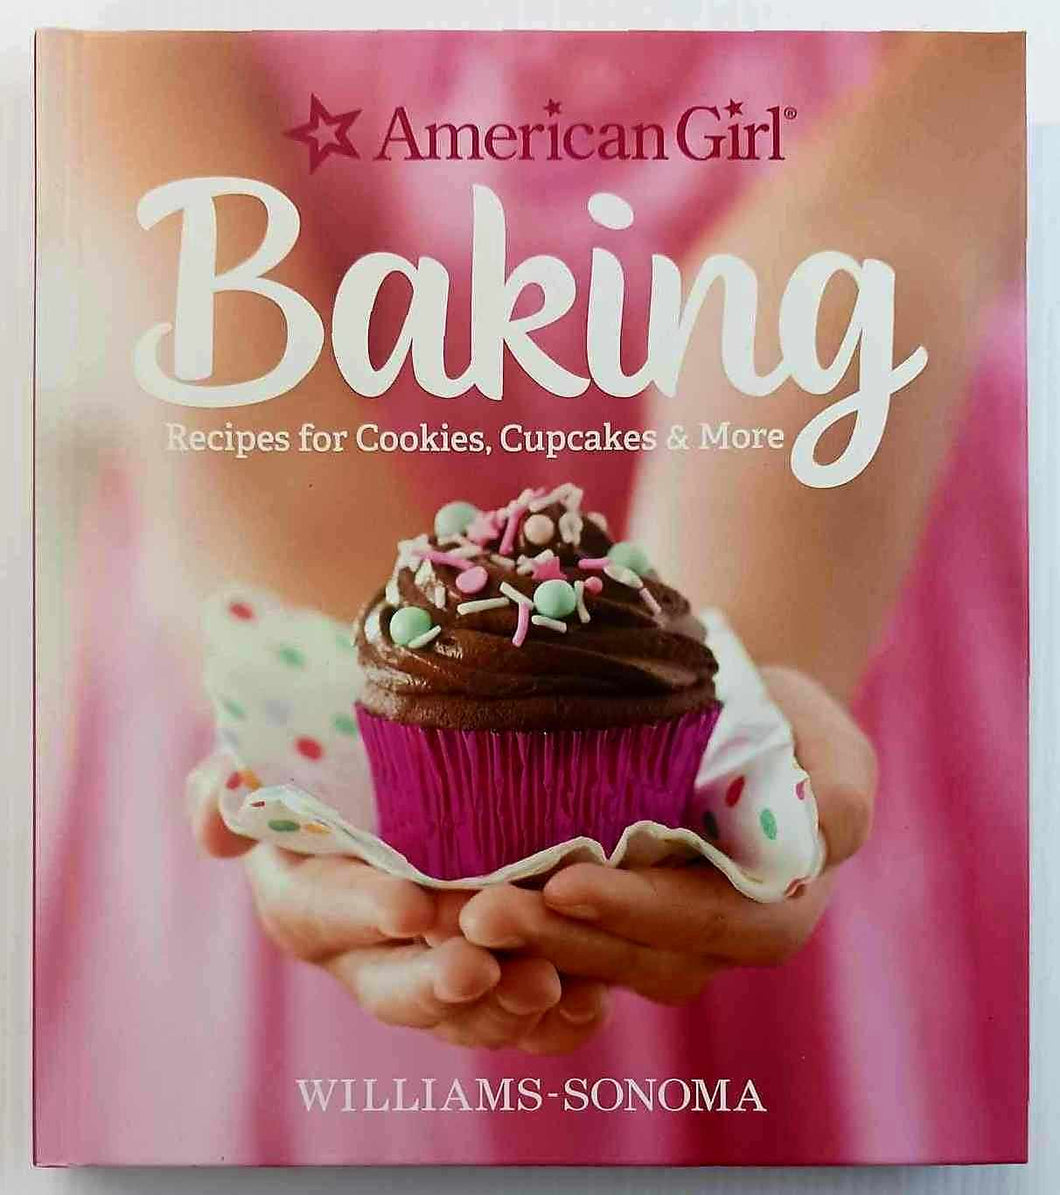 AMERICAN GIRL BAKING - Williams-Sonoma, American Girl